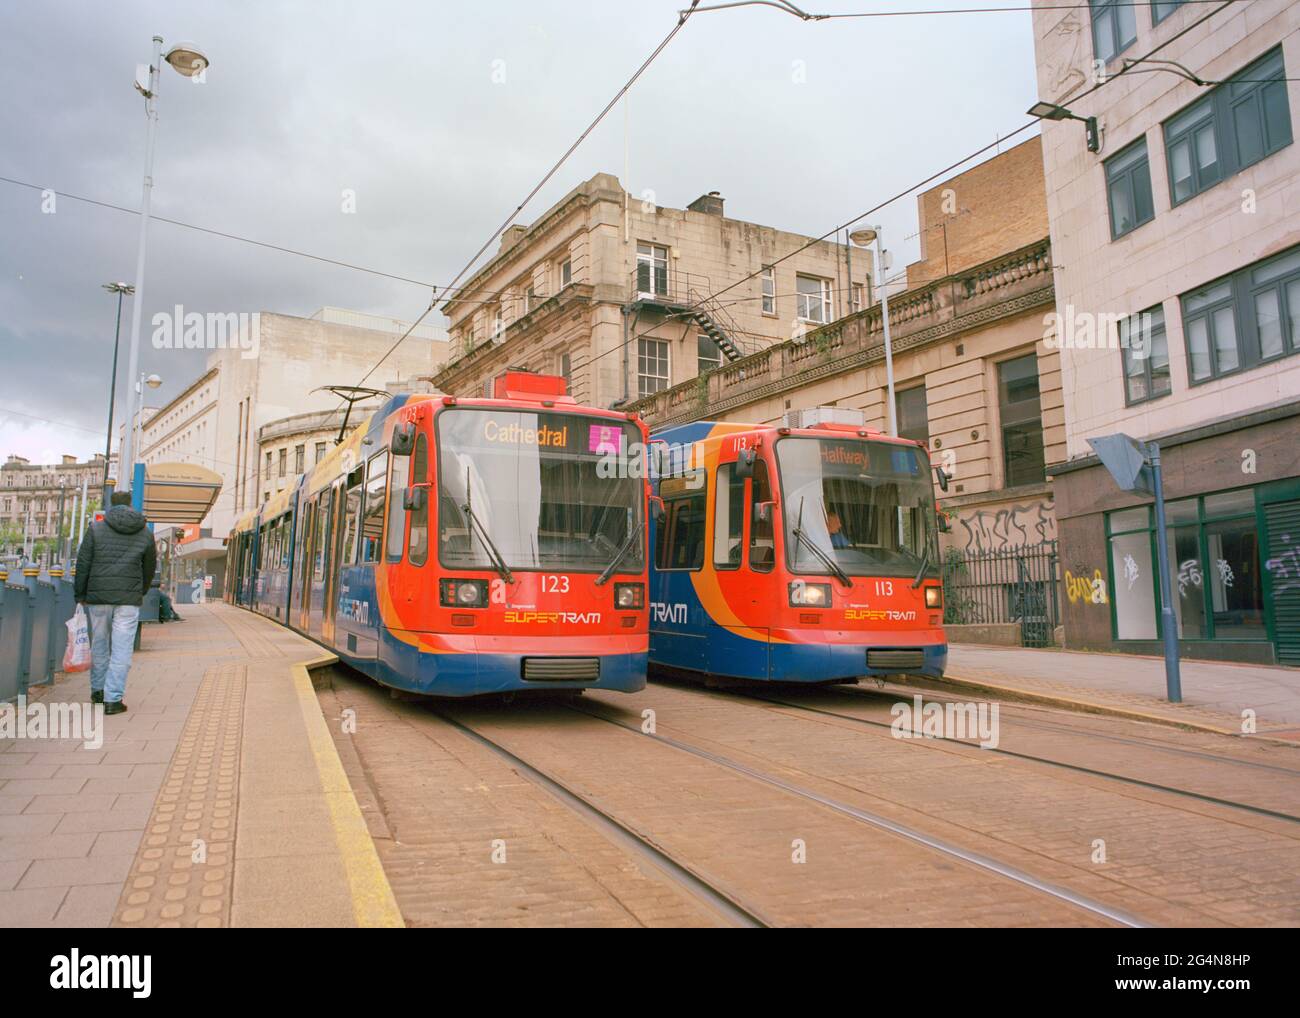 Sheffield, UK - 16 May 2021: The trams at Fitzalan Square tram stop. Stock Photo